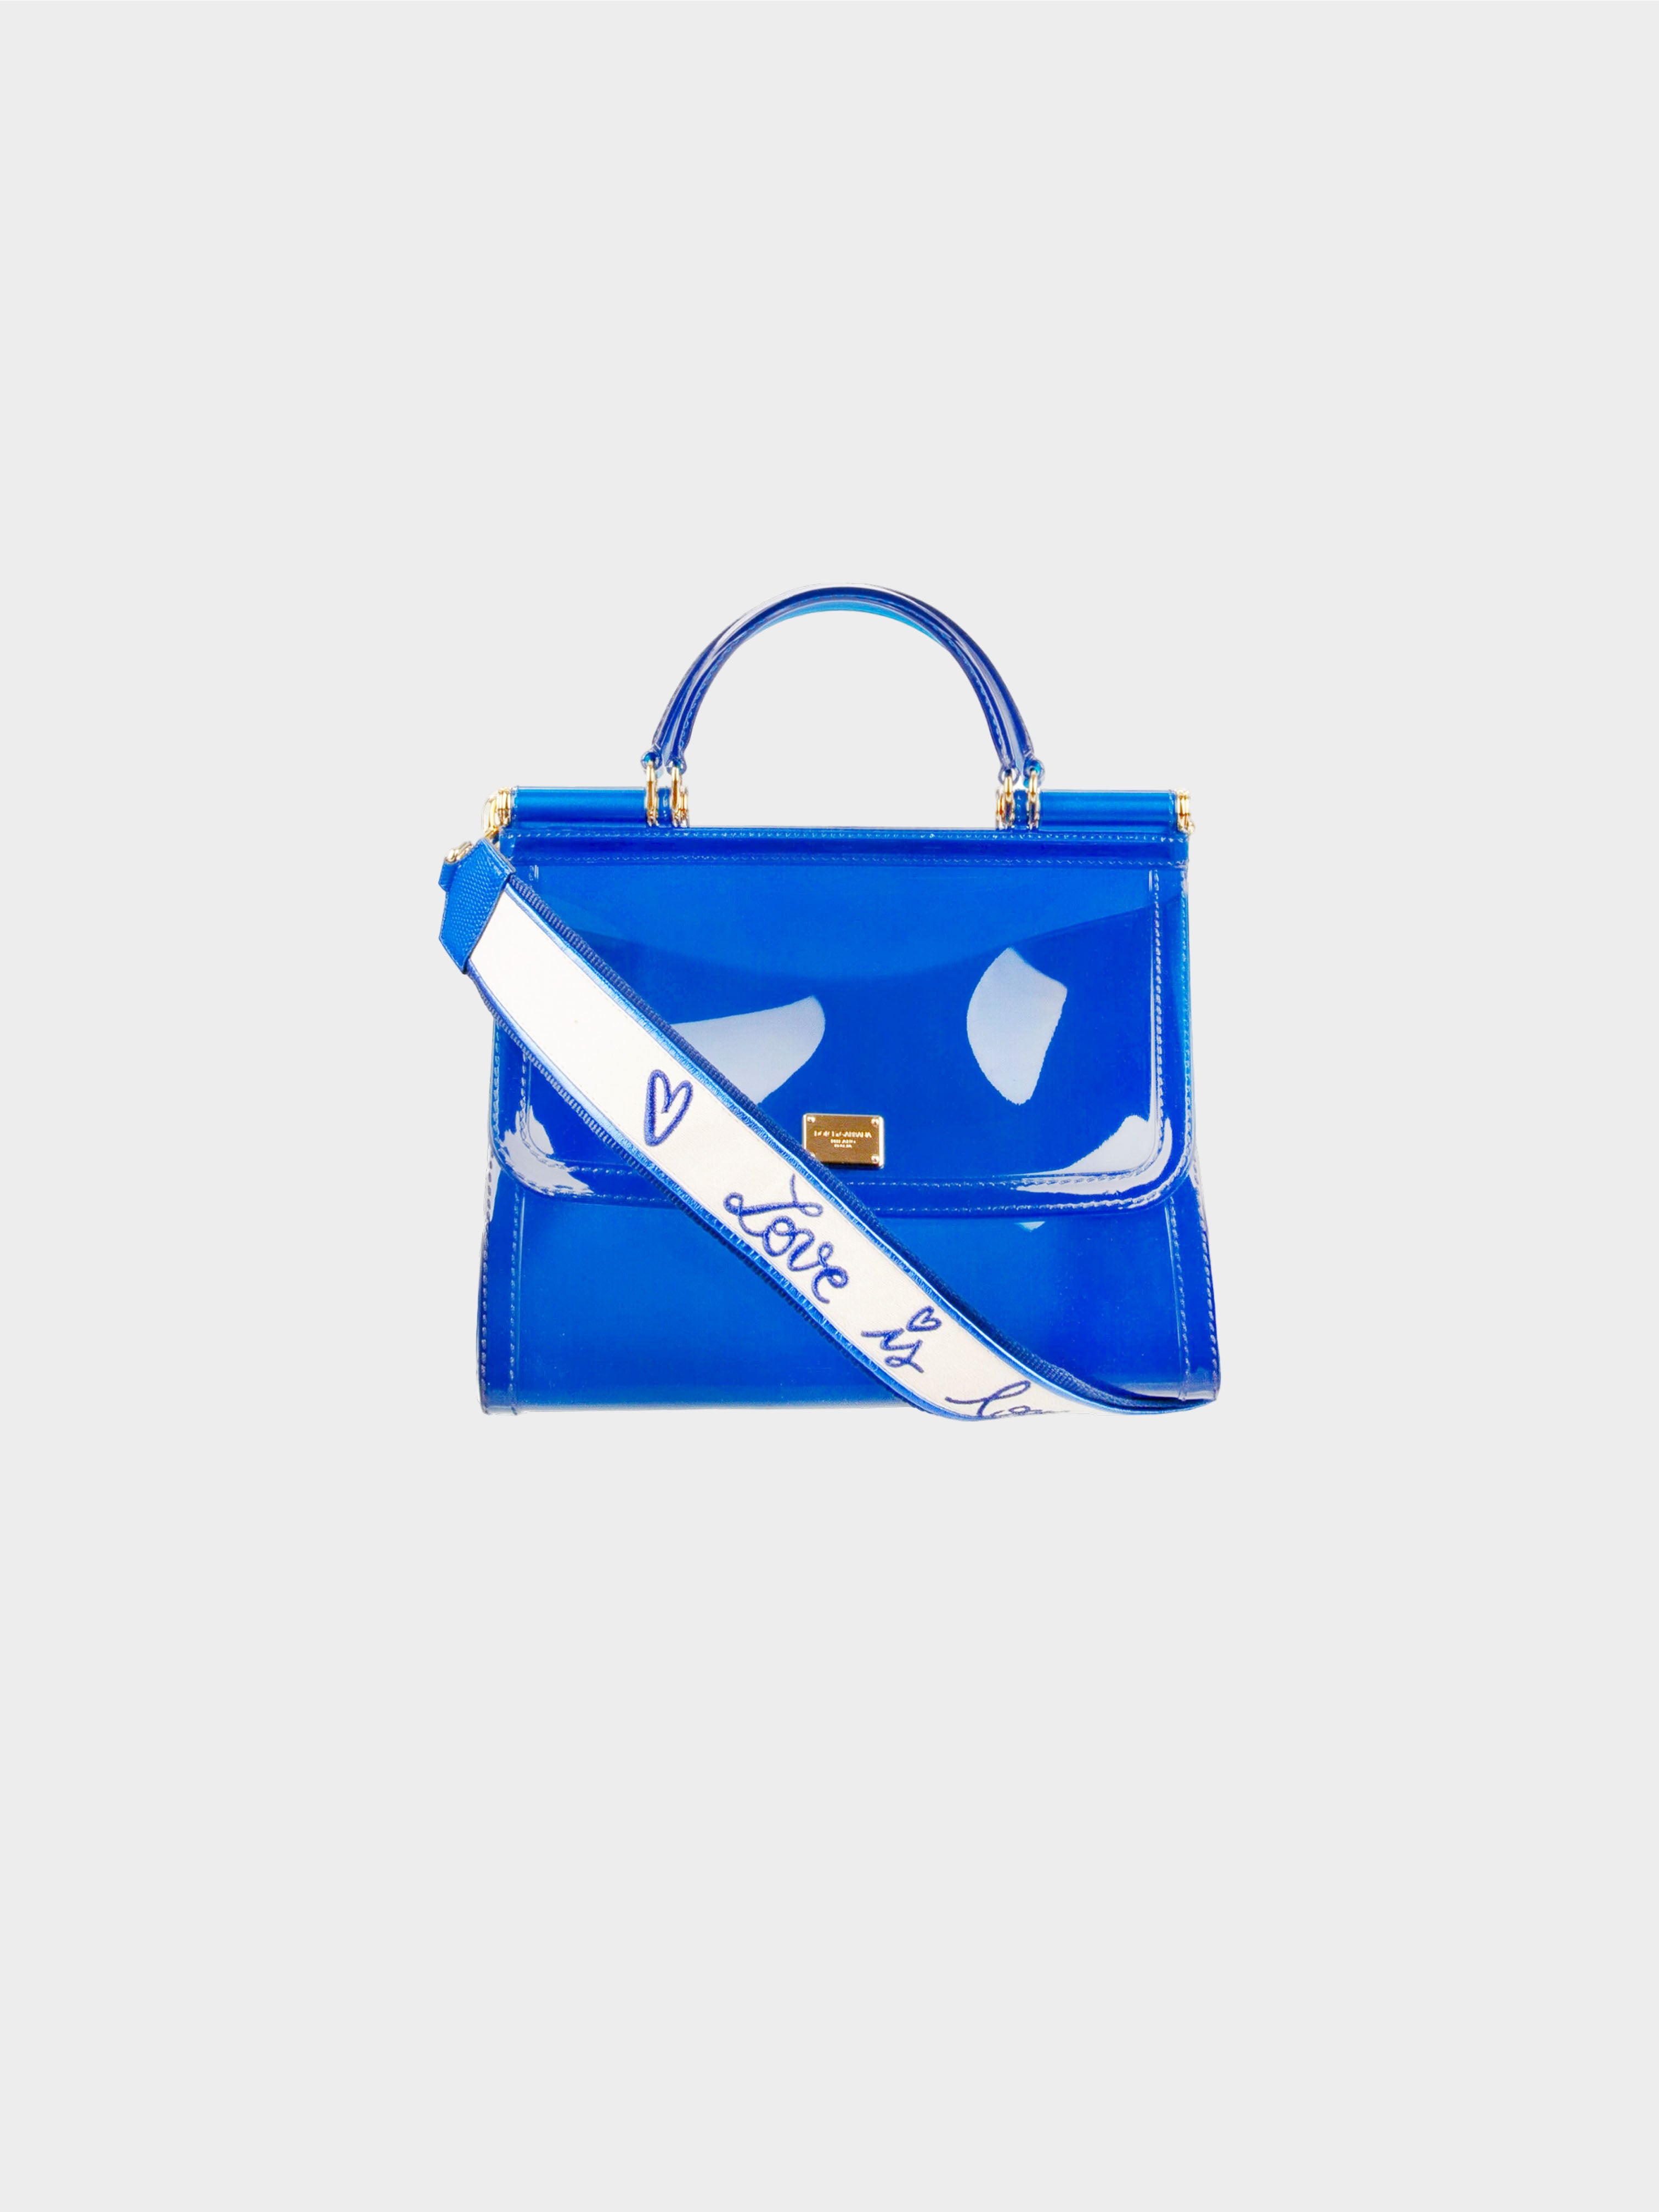 Dolce and Gabbana 2018 Blue PVC Miss Siciliy Bag